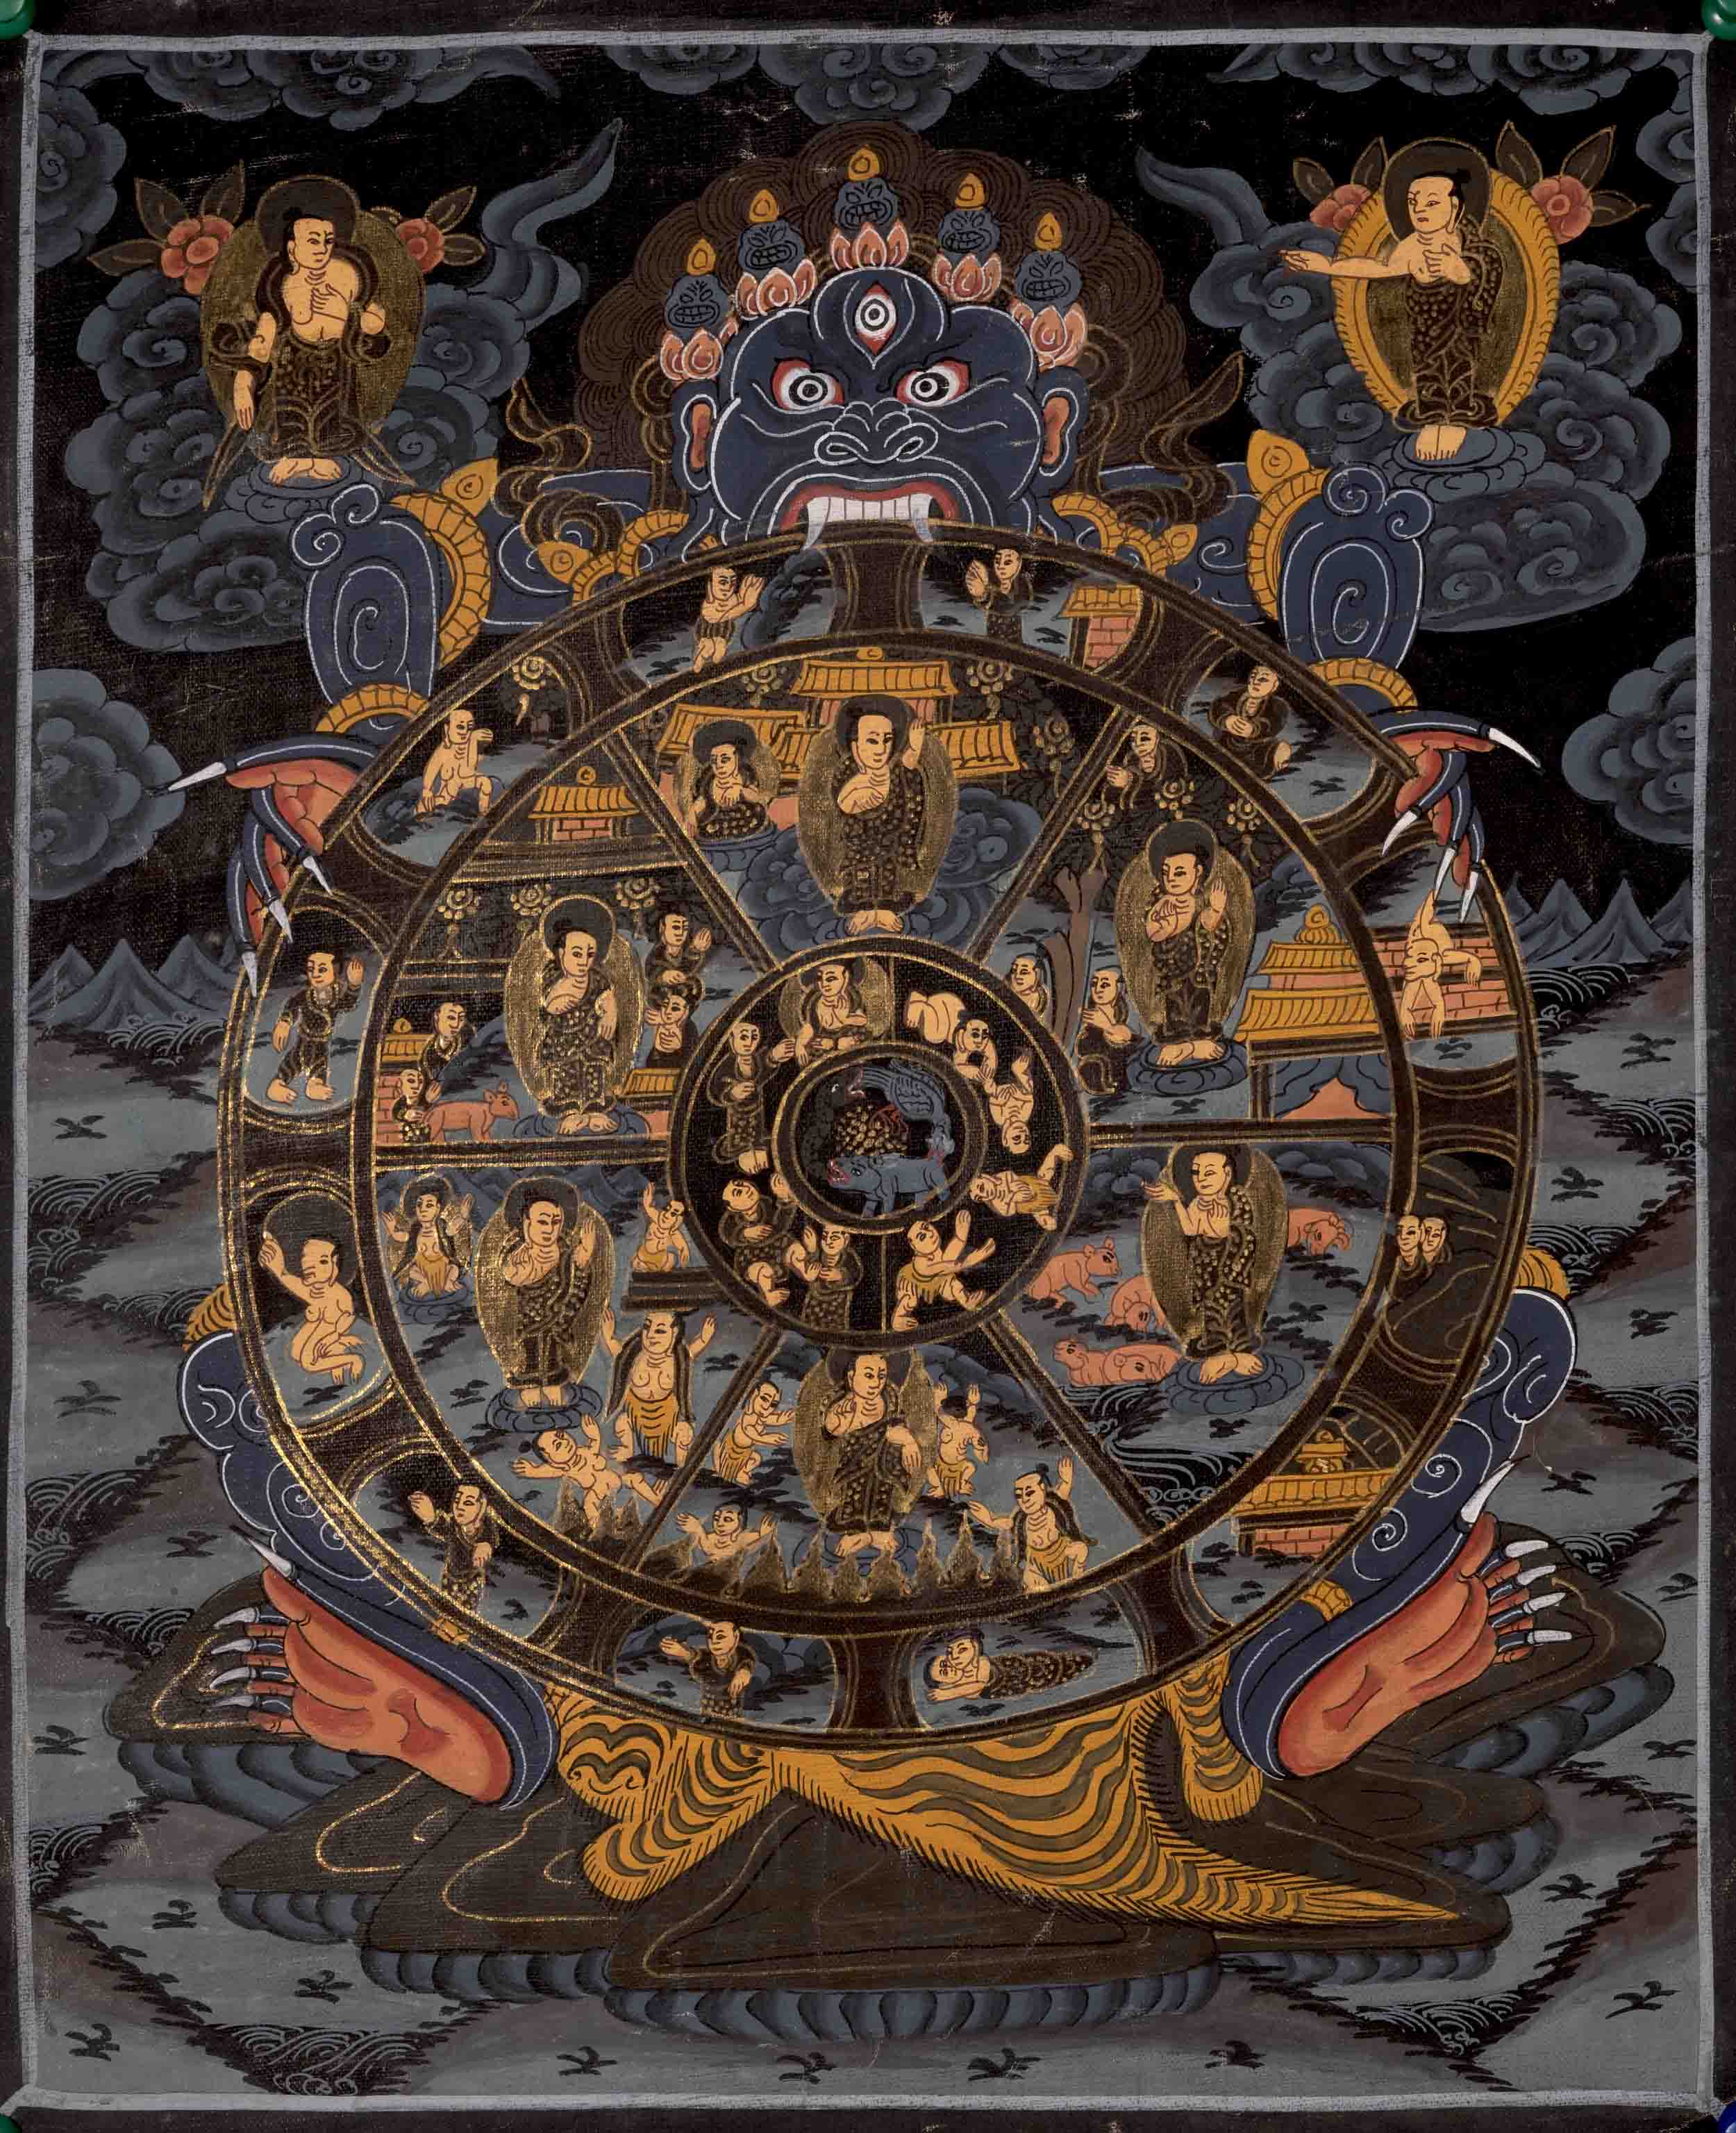 Wheel of Life Buddhist Painting | Traditional Himalayan Art